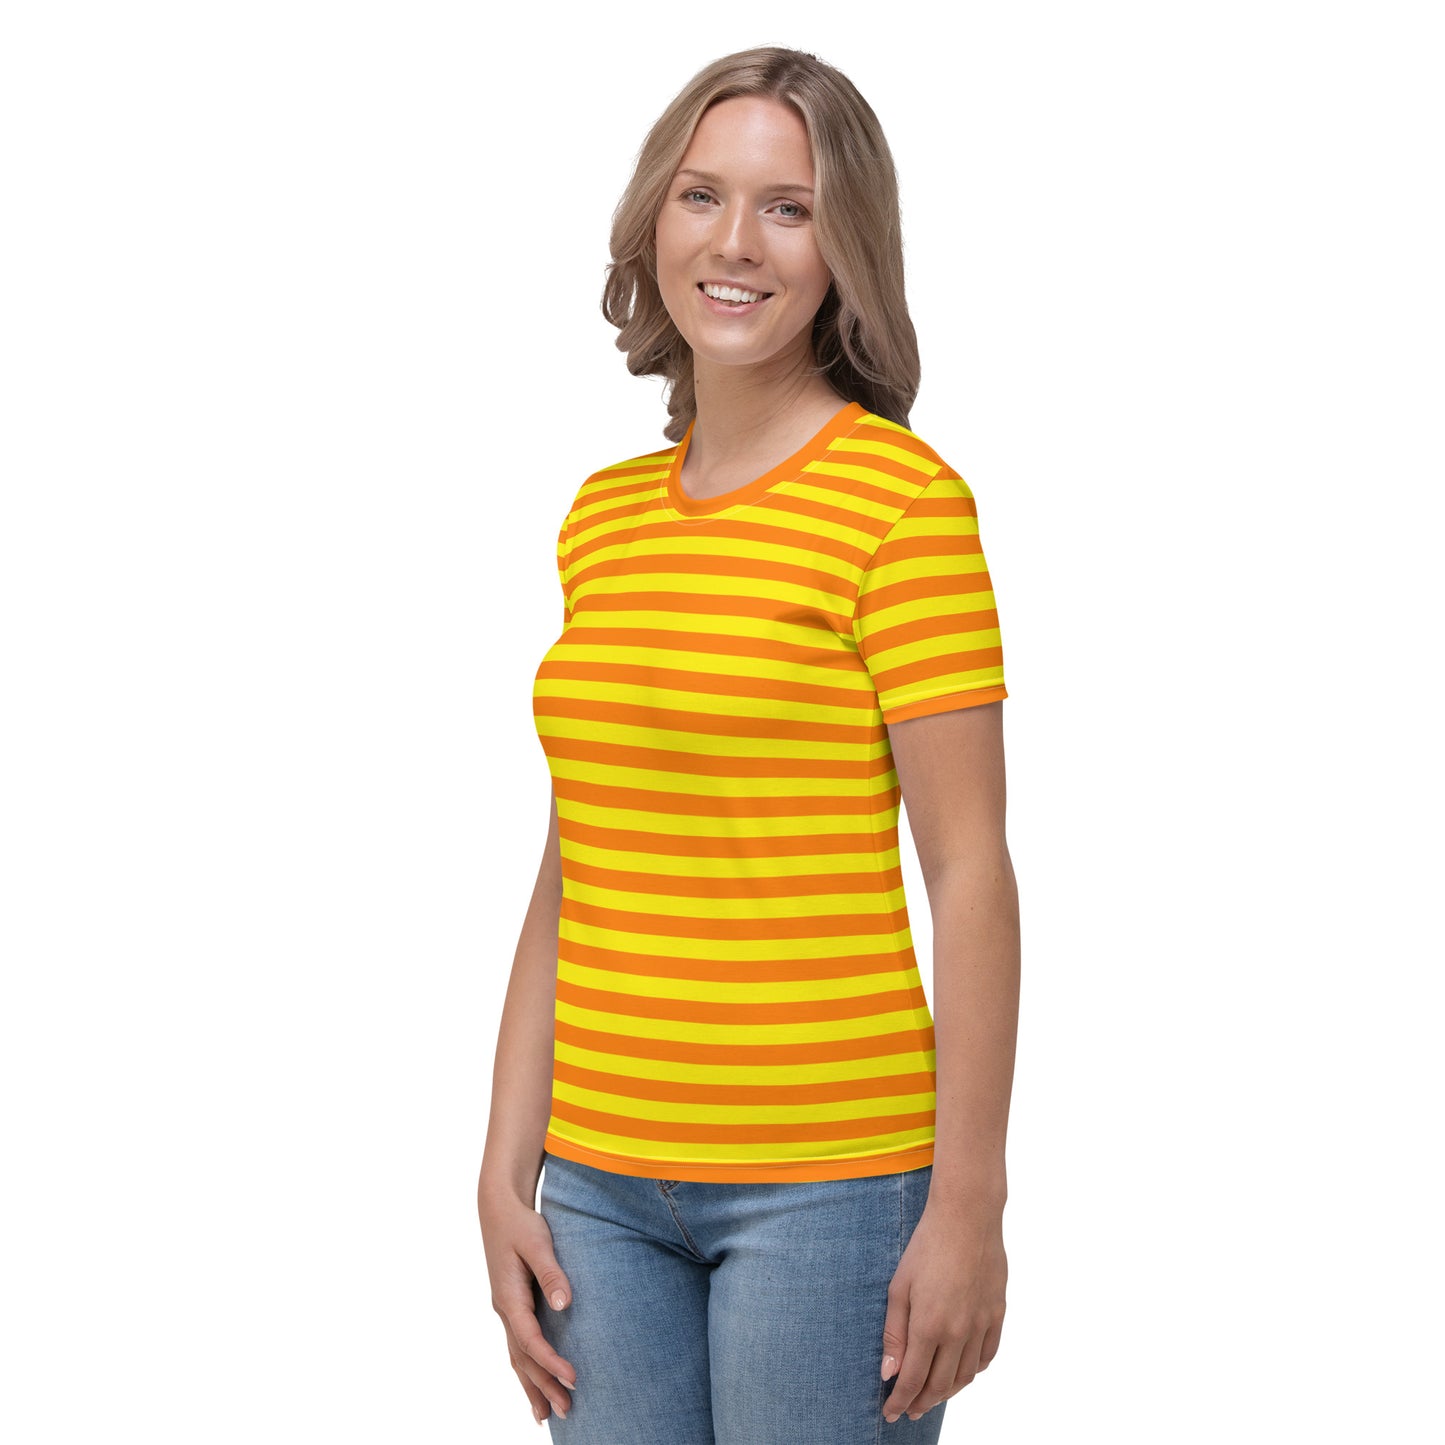 Women's orange and yellow striped t-shirt